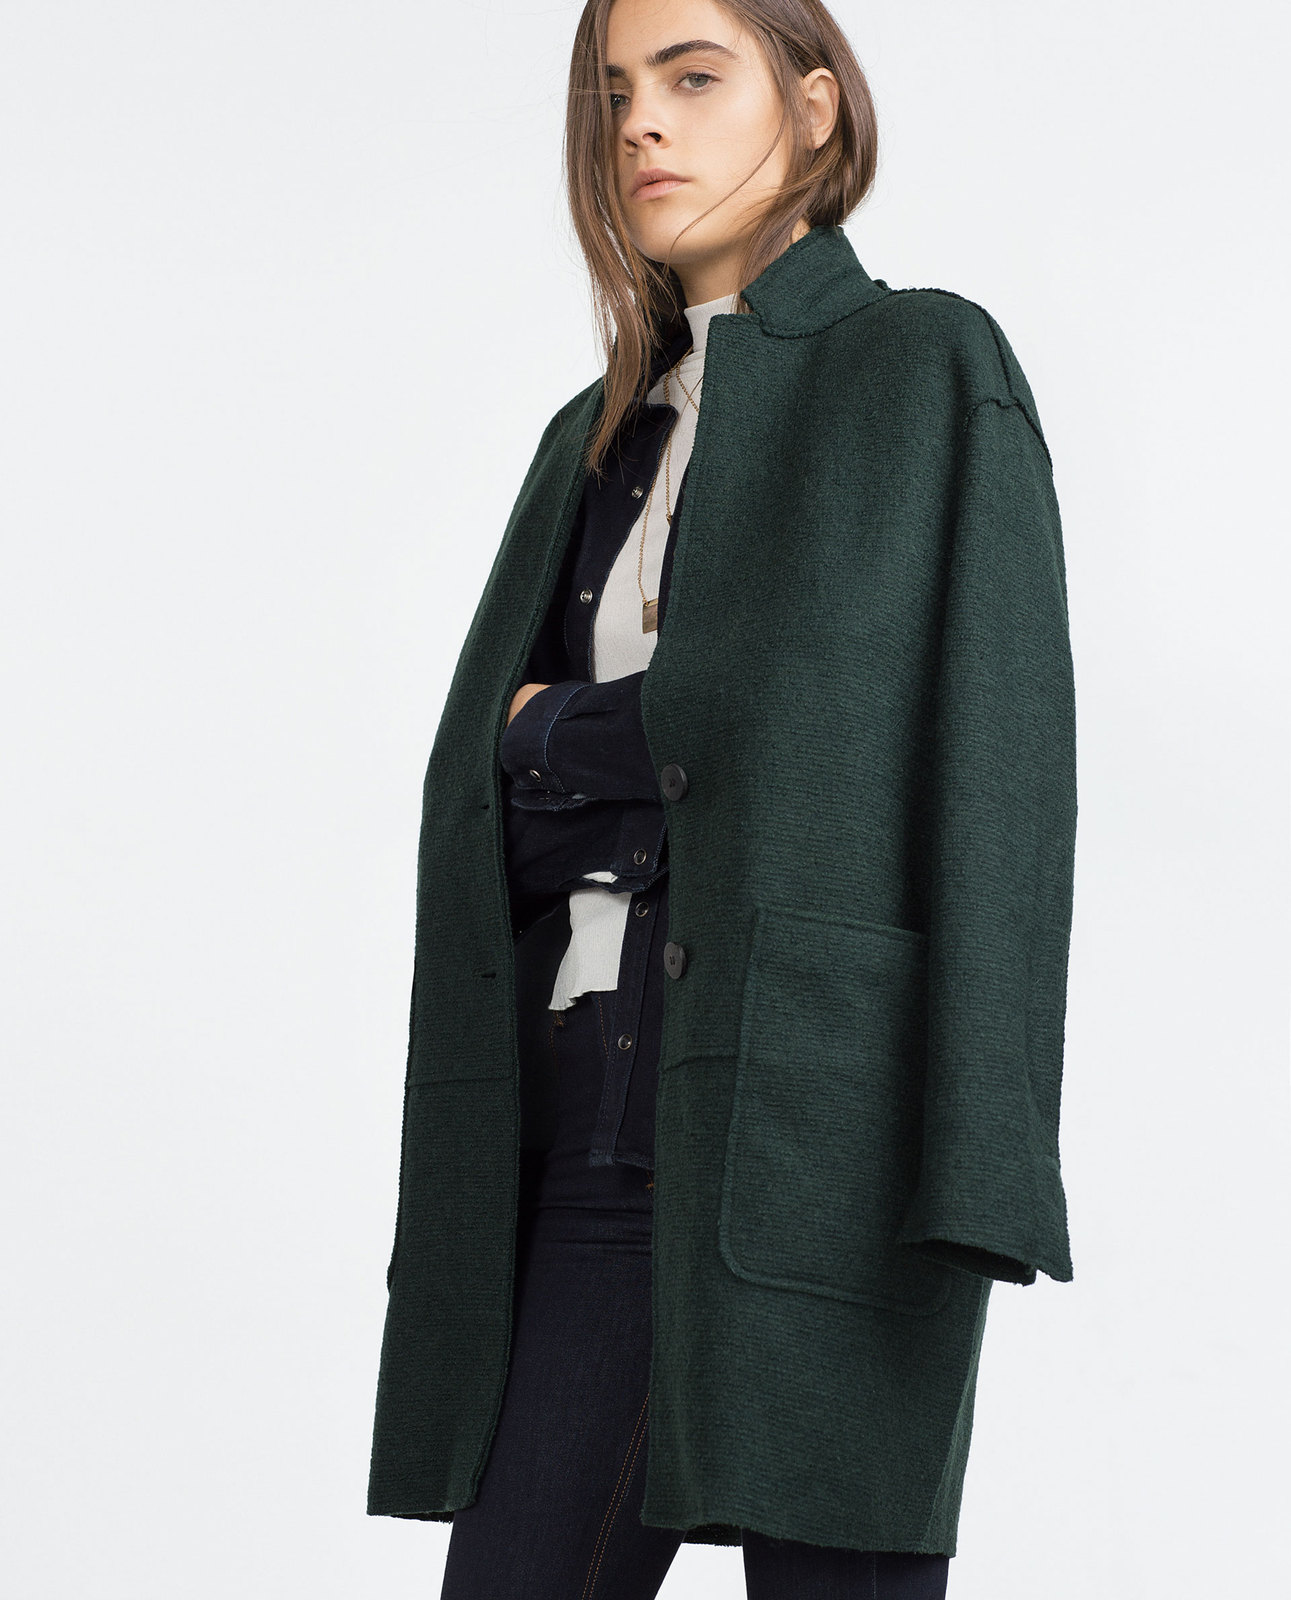 Zara sötétzöld női gyapjú kabát 2015 fotója